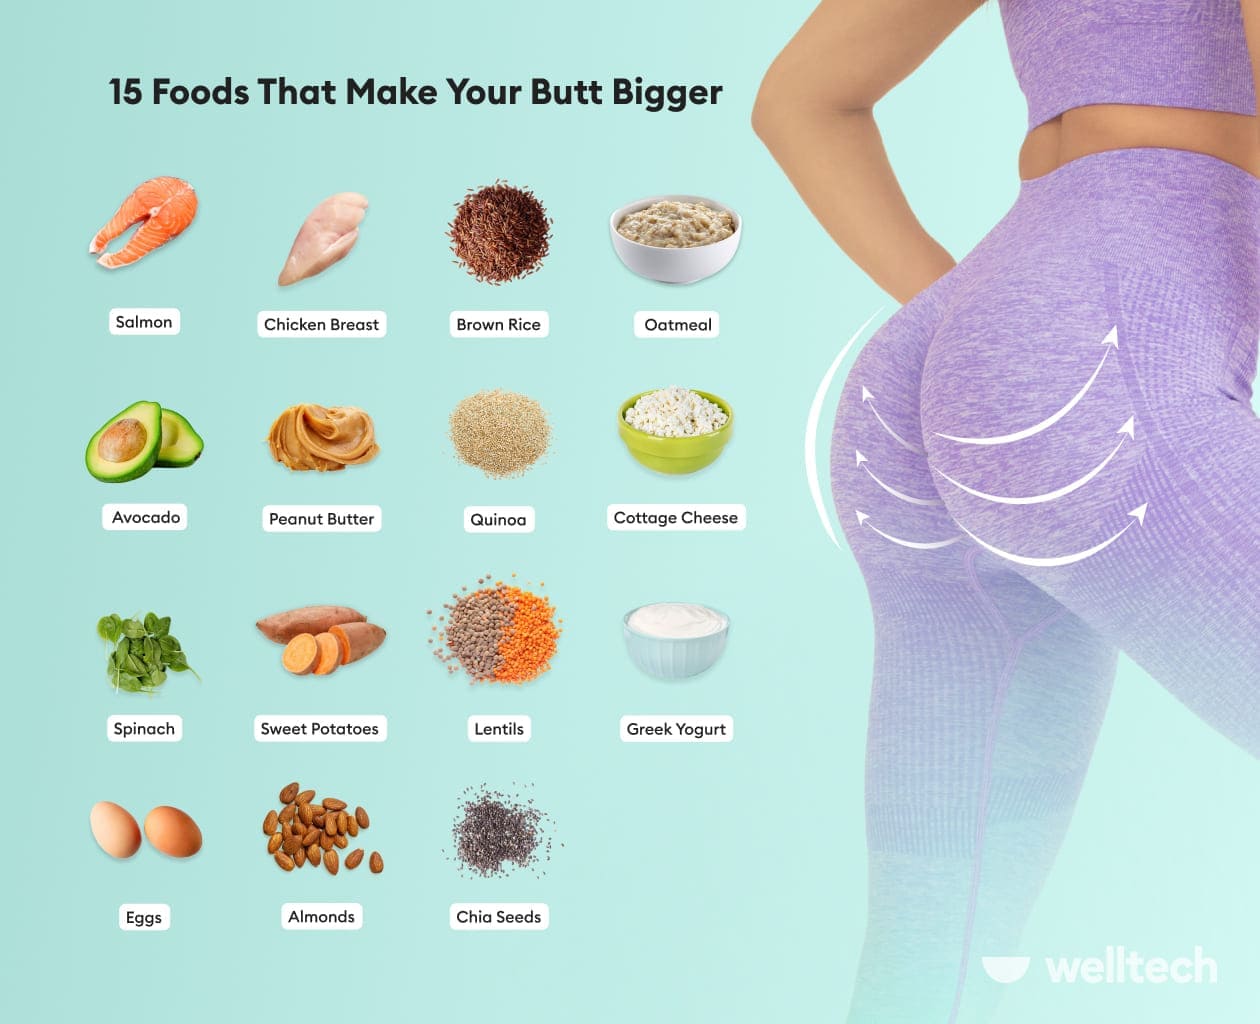 the image illustrates 15 foods that make your butt bigger like salmon, chicken breasts, quinoa, avocado, sweet potato, eggs, etc